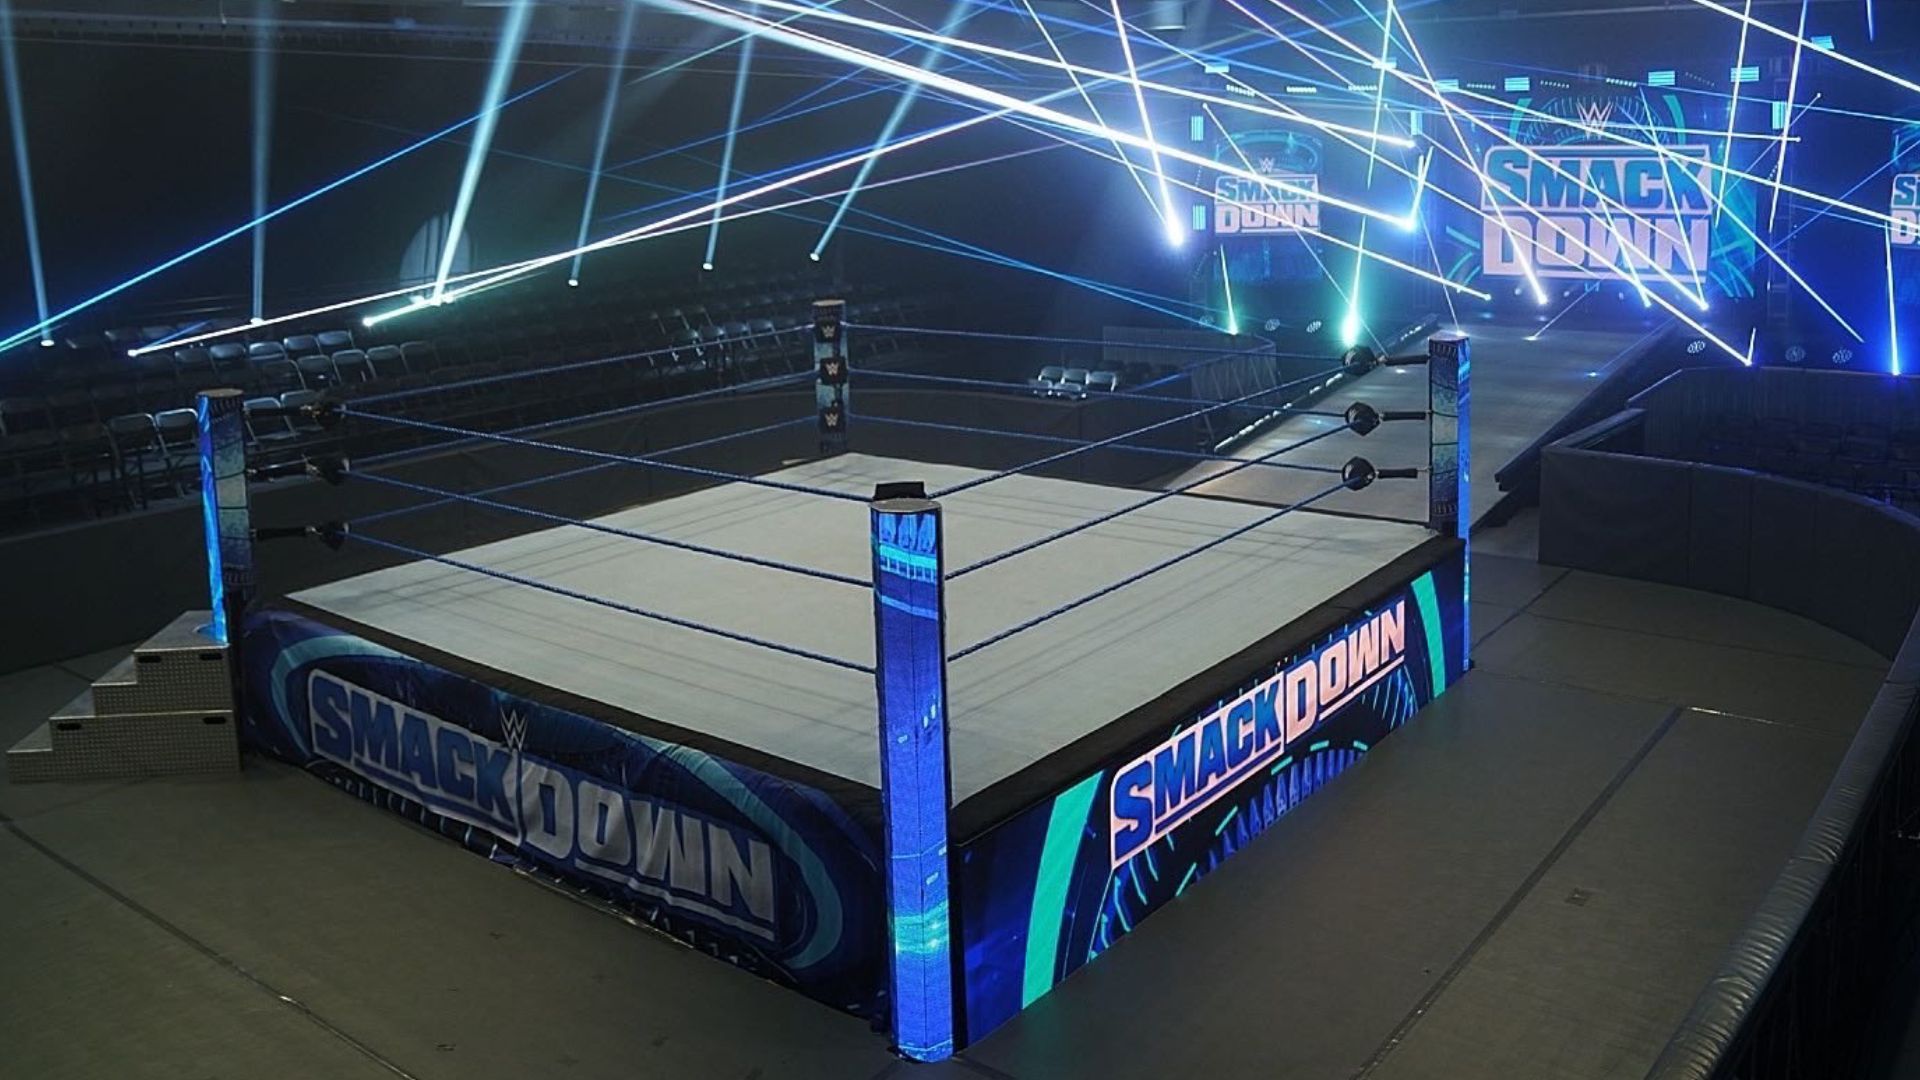 WWE SmackDown ring. Image Credits: wwe.com 